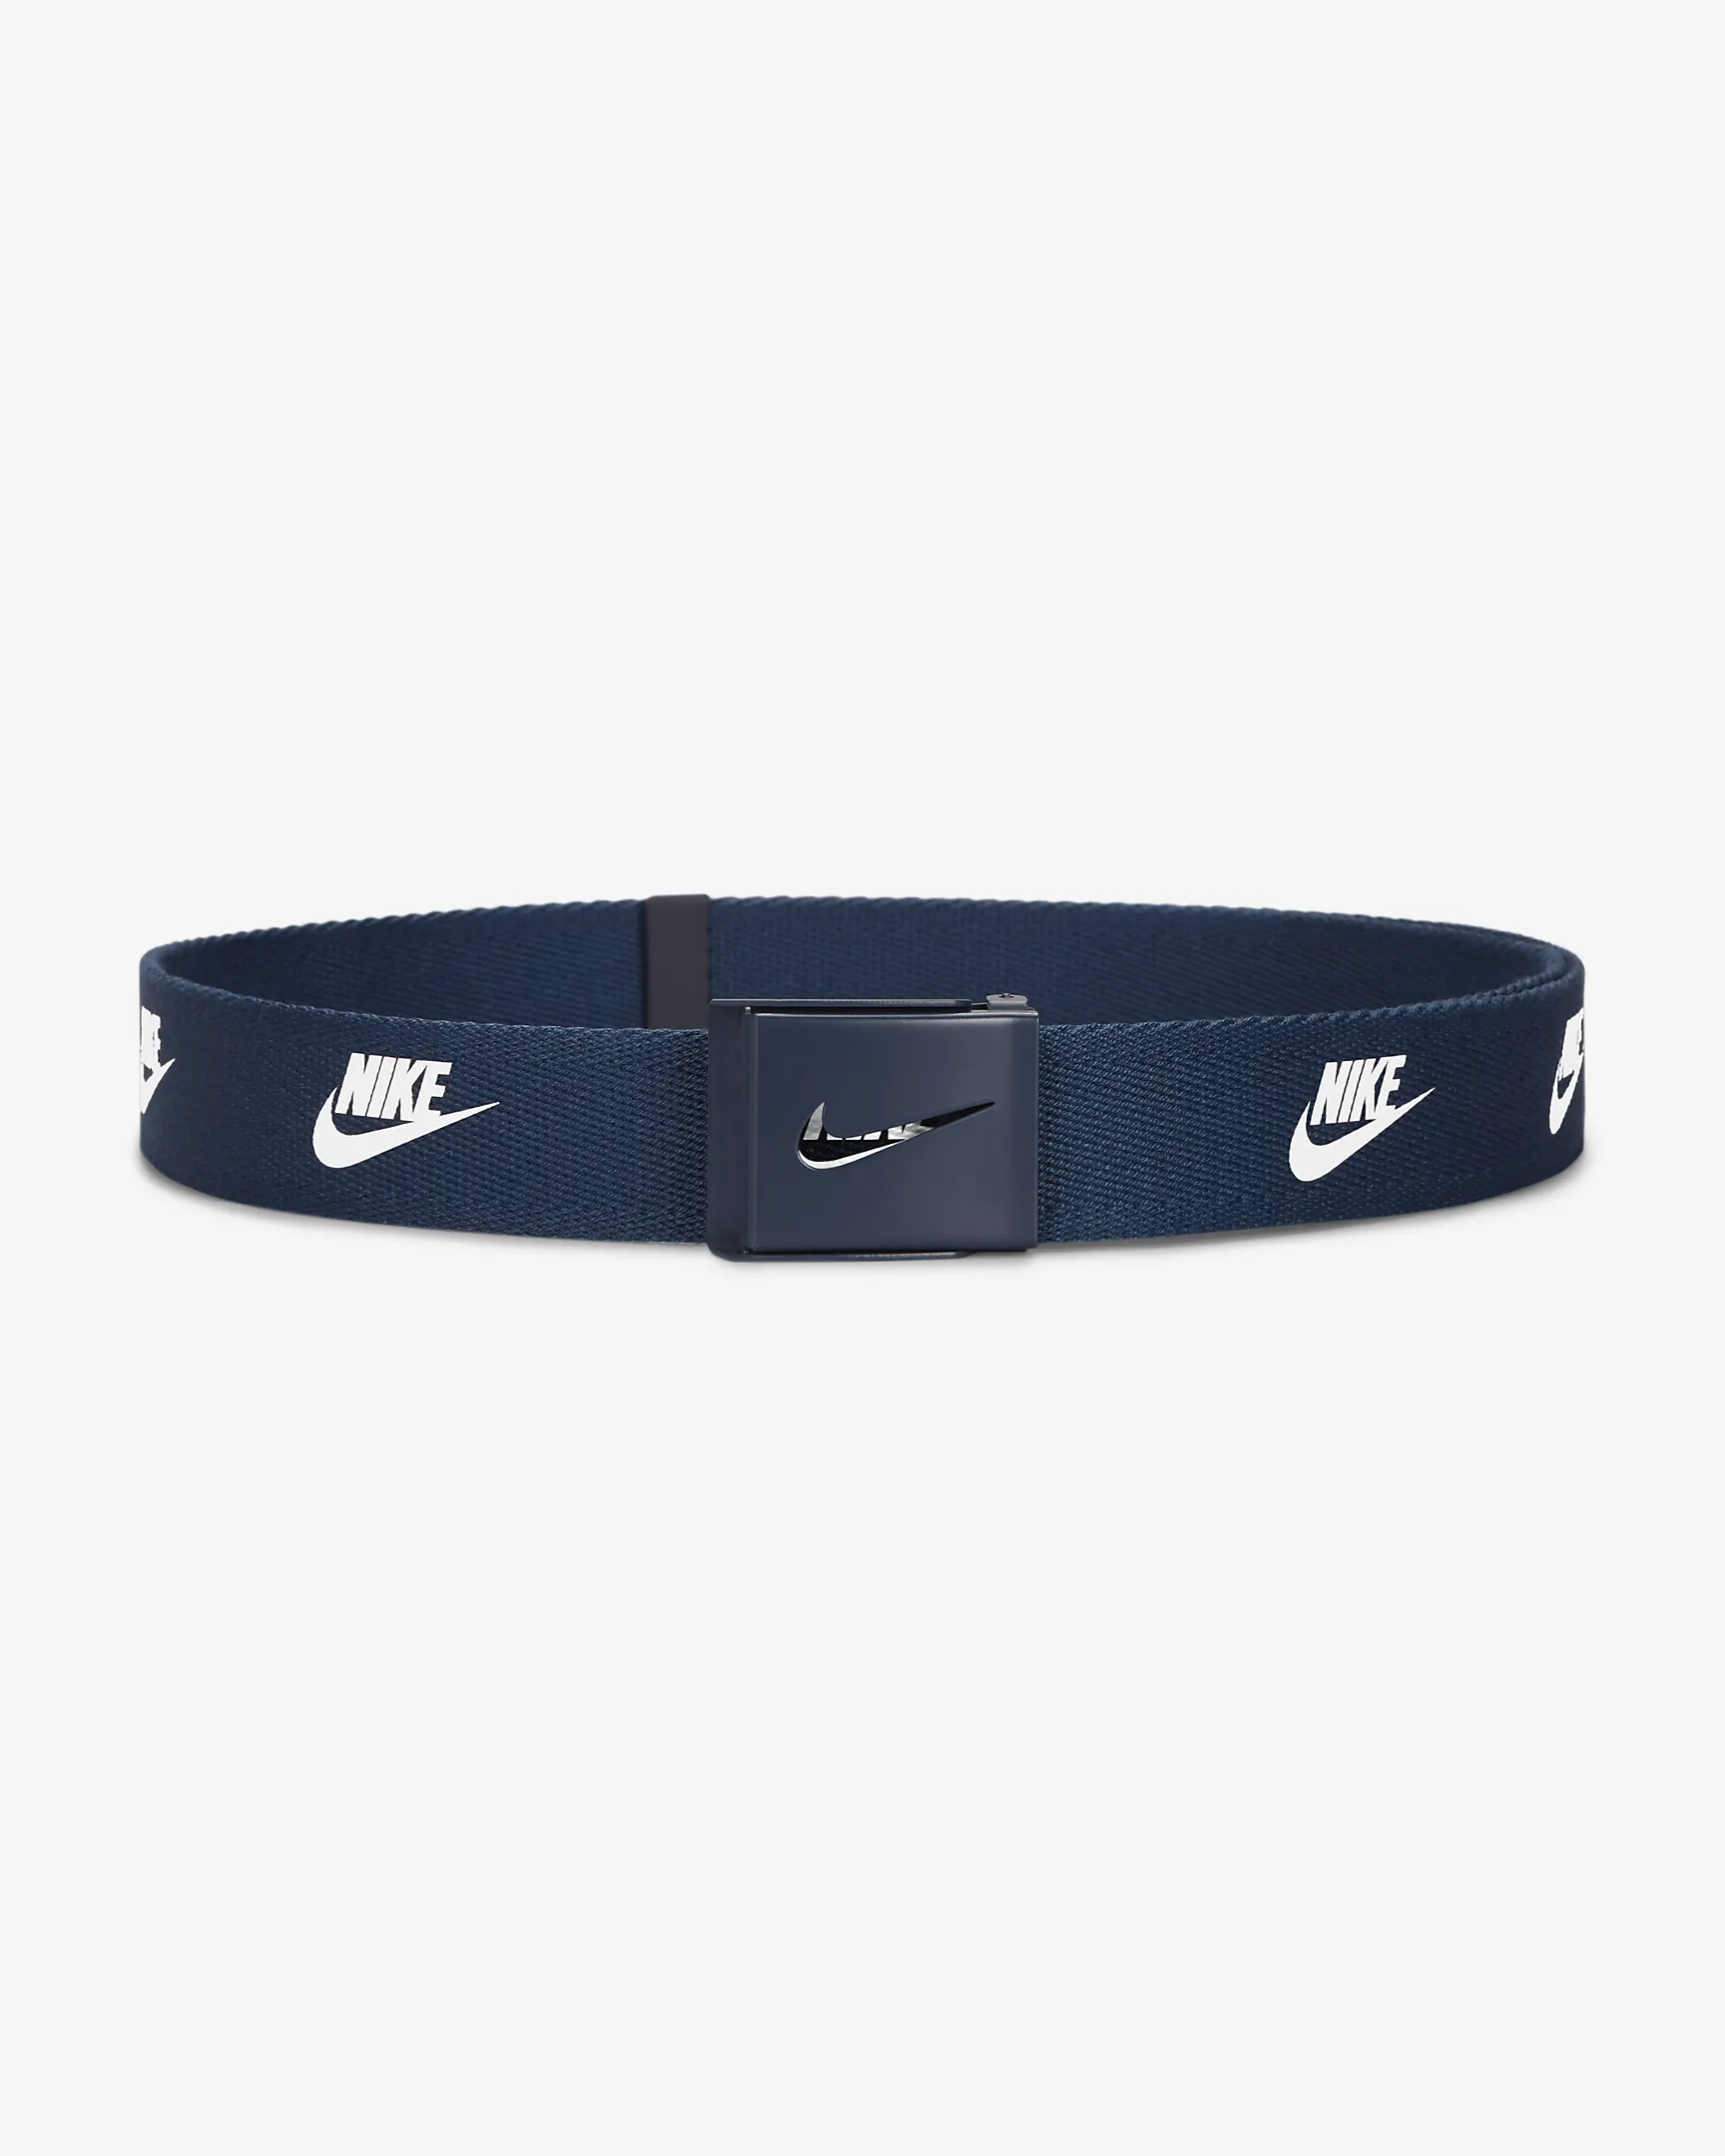 Nike | 11303405 | Futura Men's Web Golf Belt with logo  | Reversible